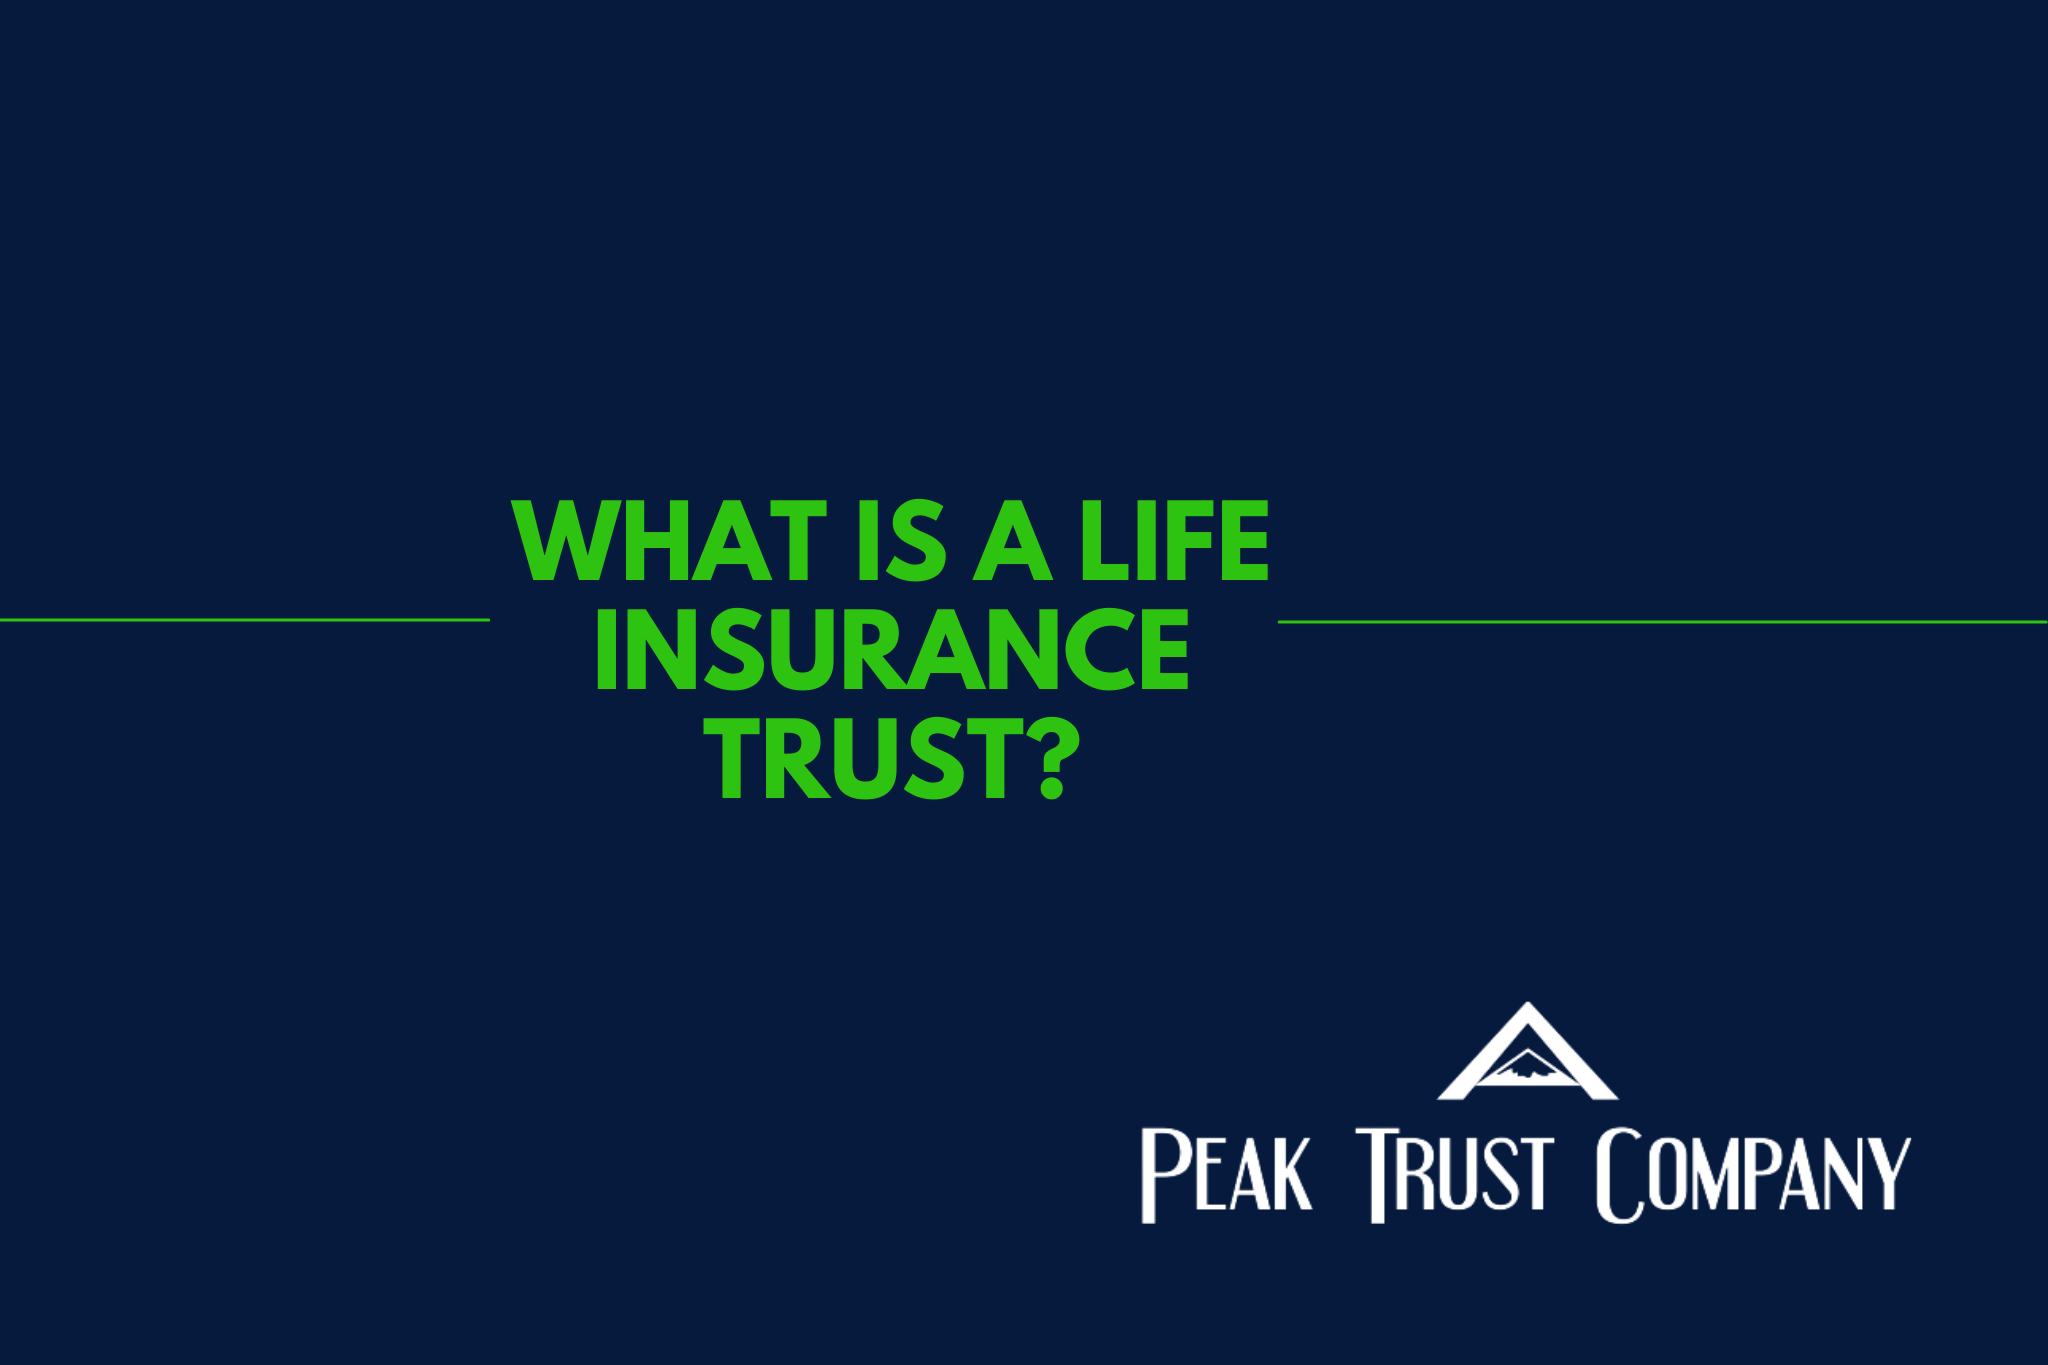 what-is-a-life-insurance-trust-peak-trust-company